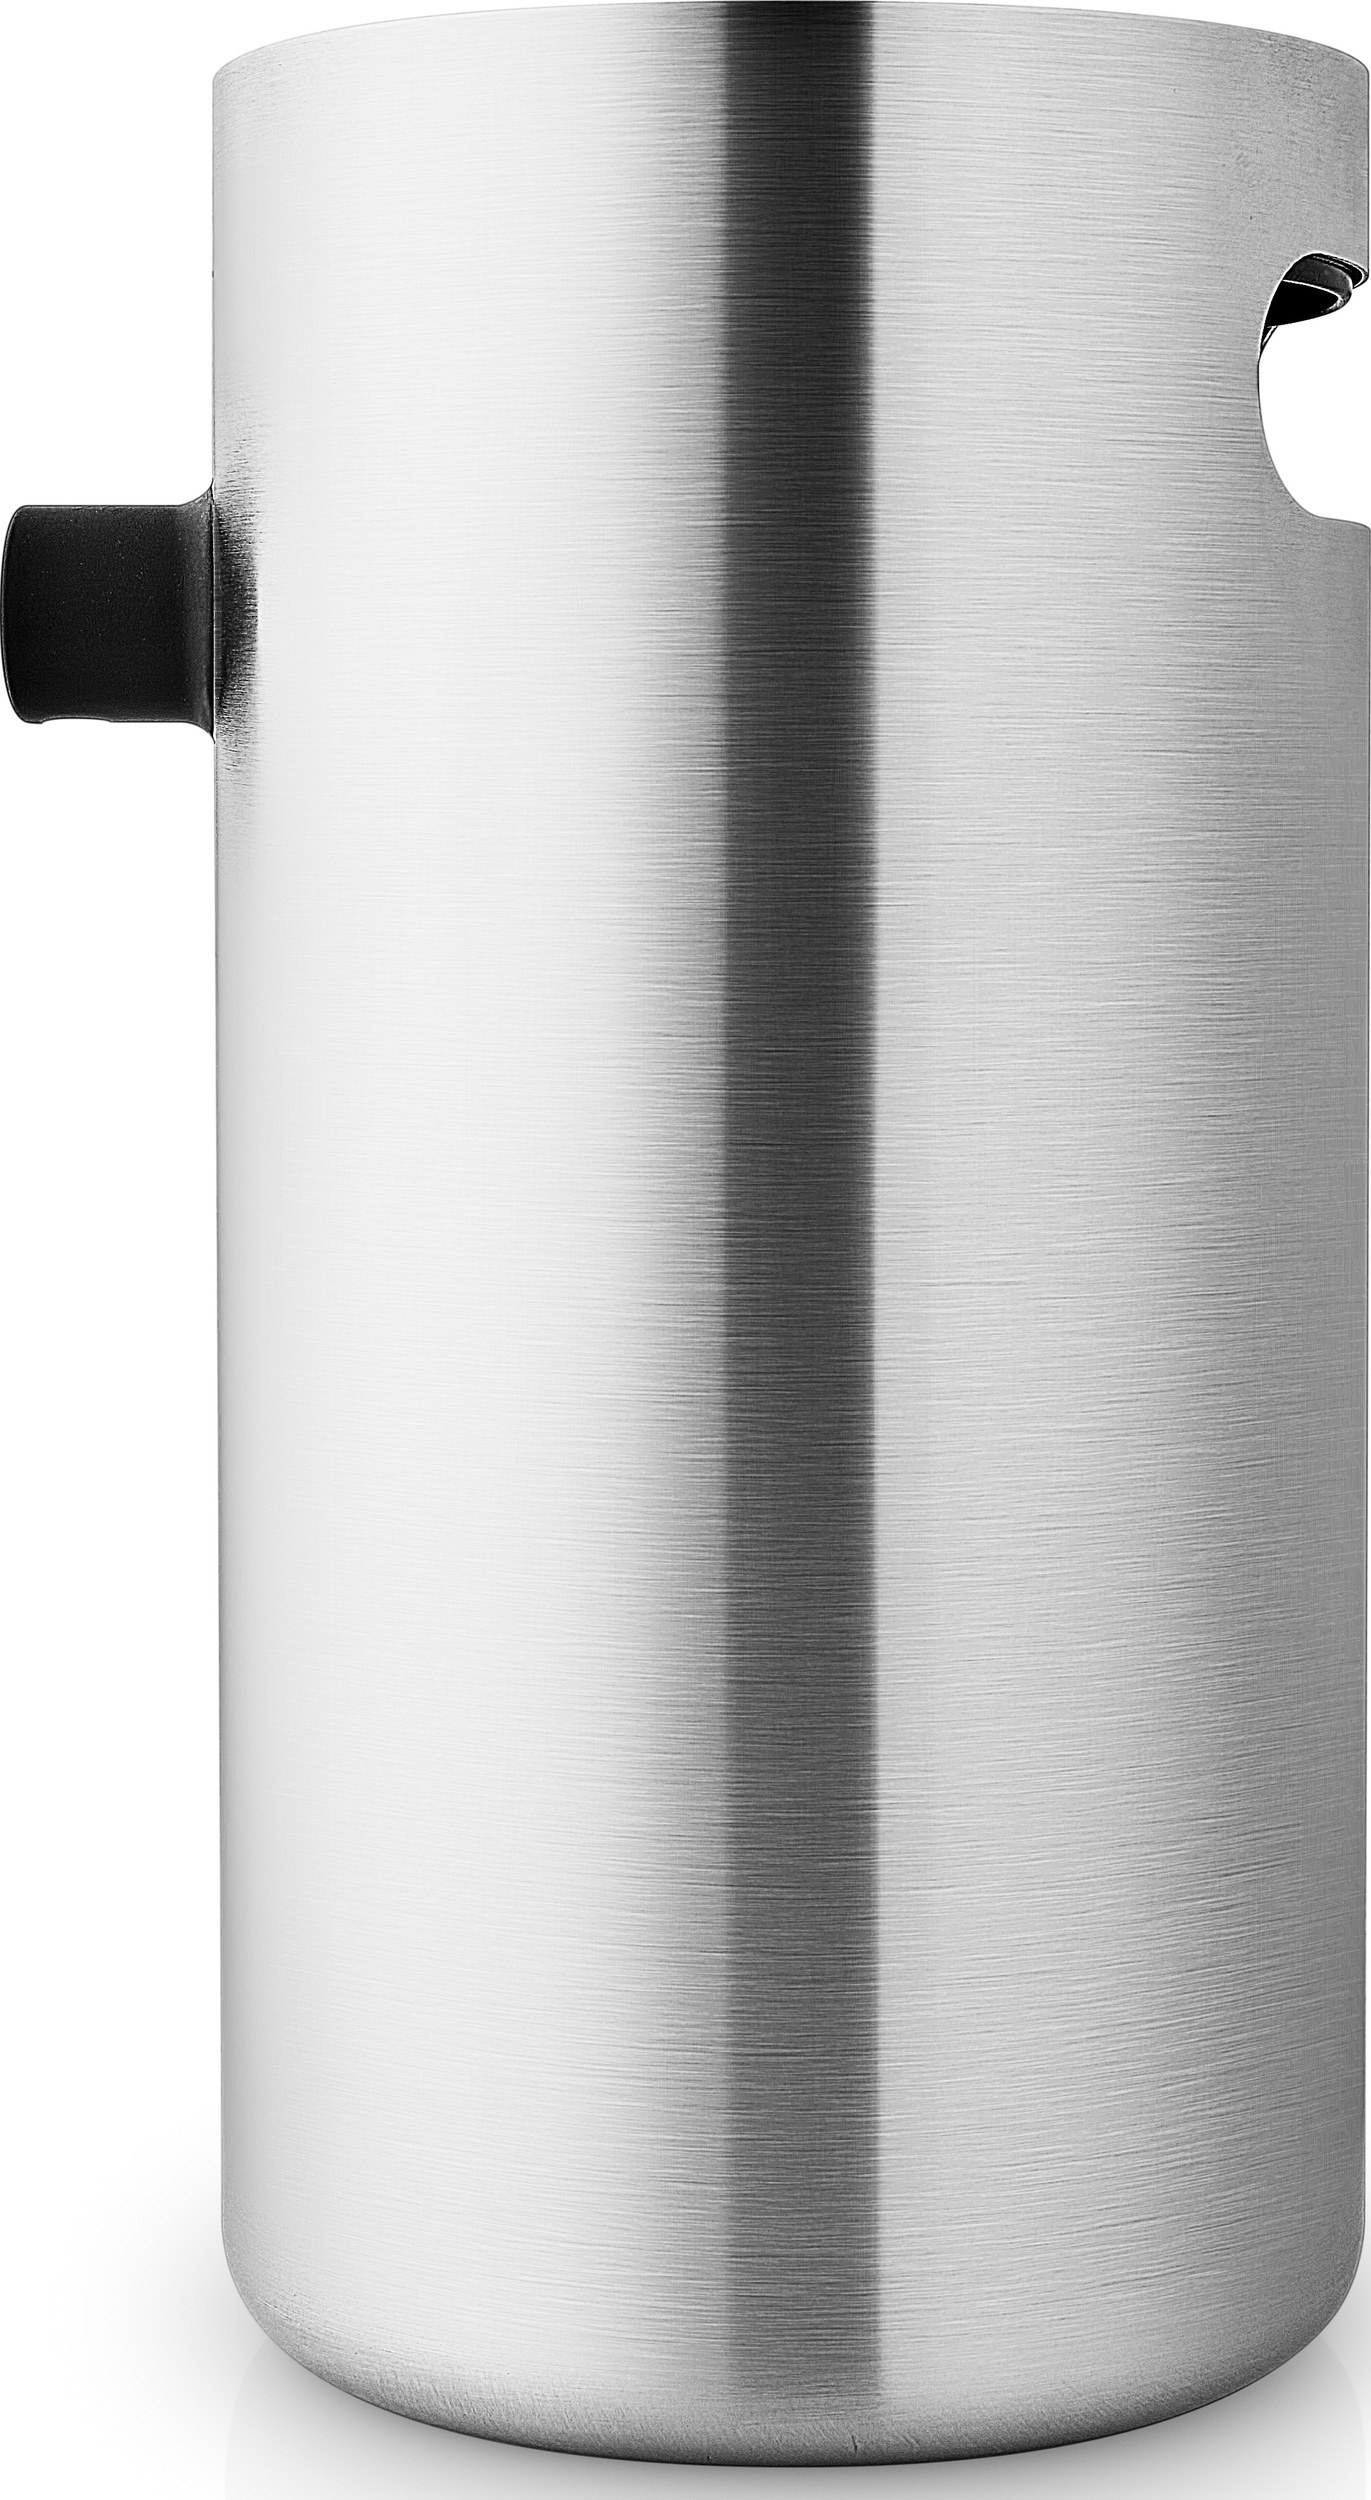 Eva Solo - Nordic Kitchen pump thermos